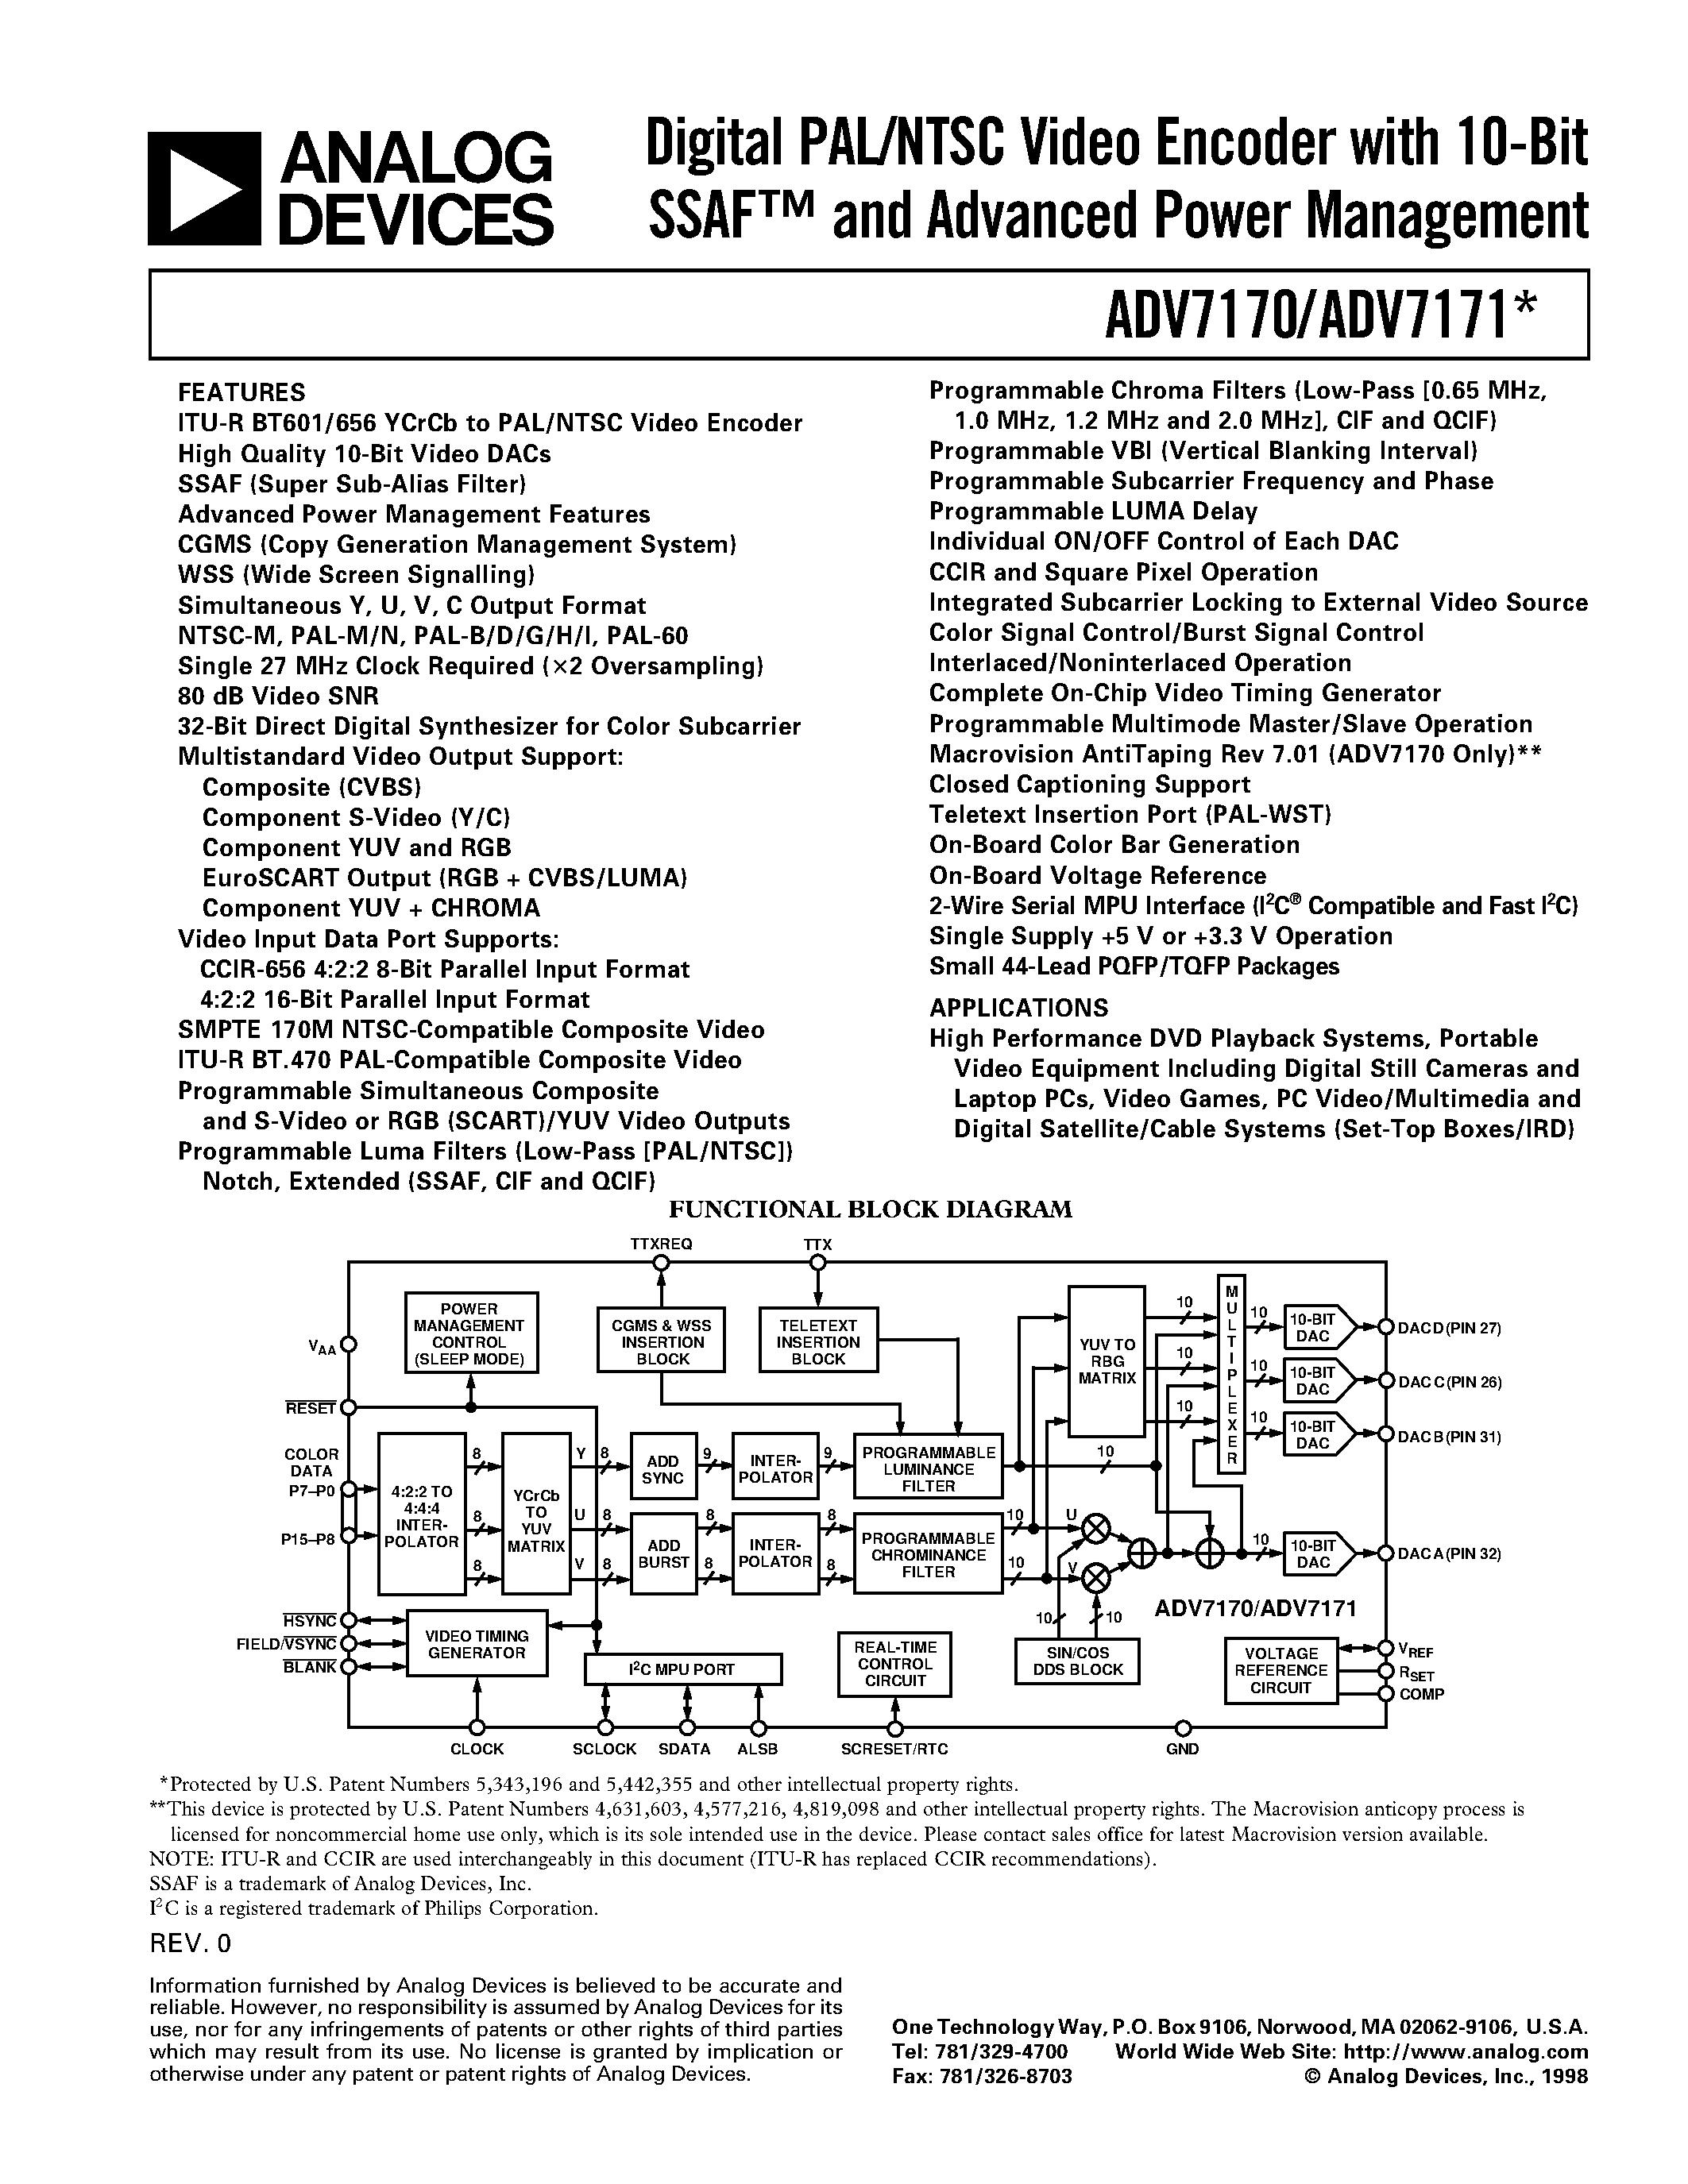 Даташит ADV7170 - Digital PAL/NTSC Video Encoder with 10-Bit SSAF and Advanced Power Management страница 1